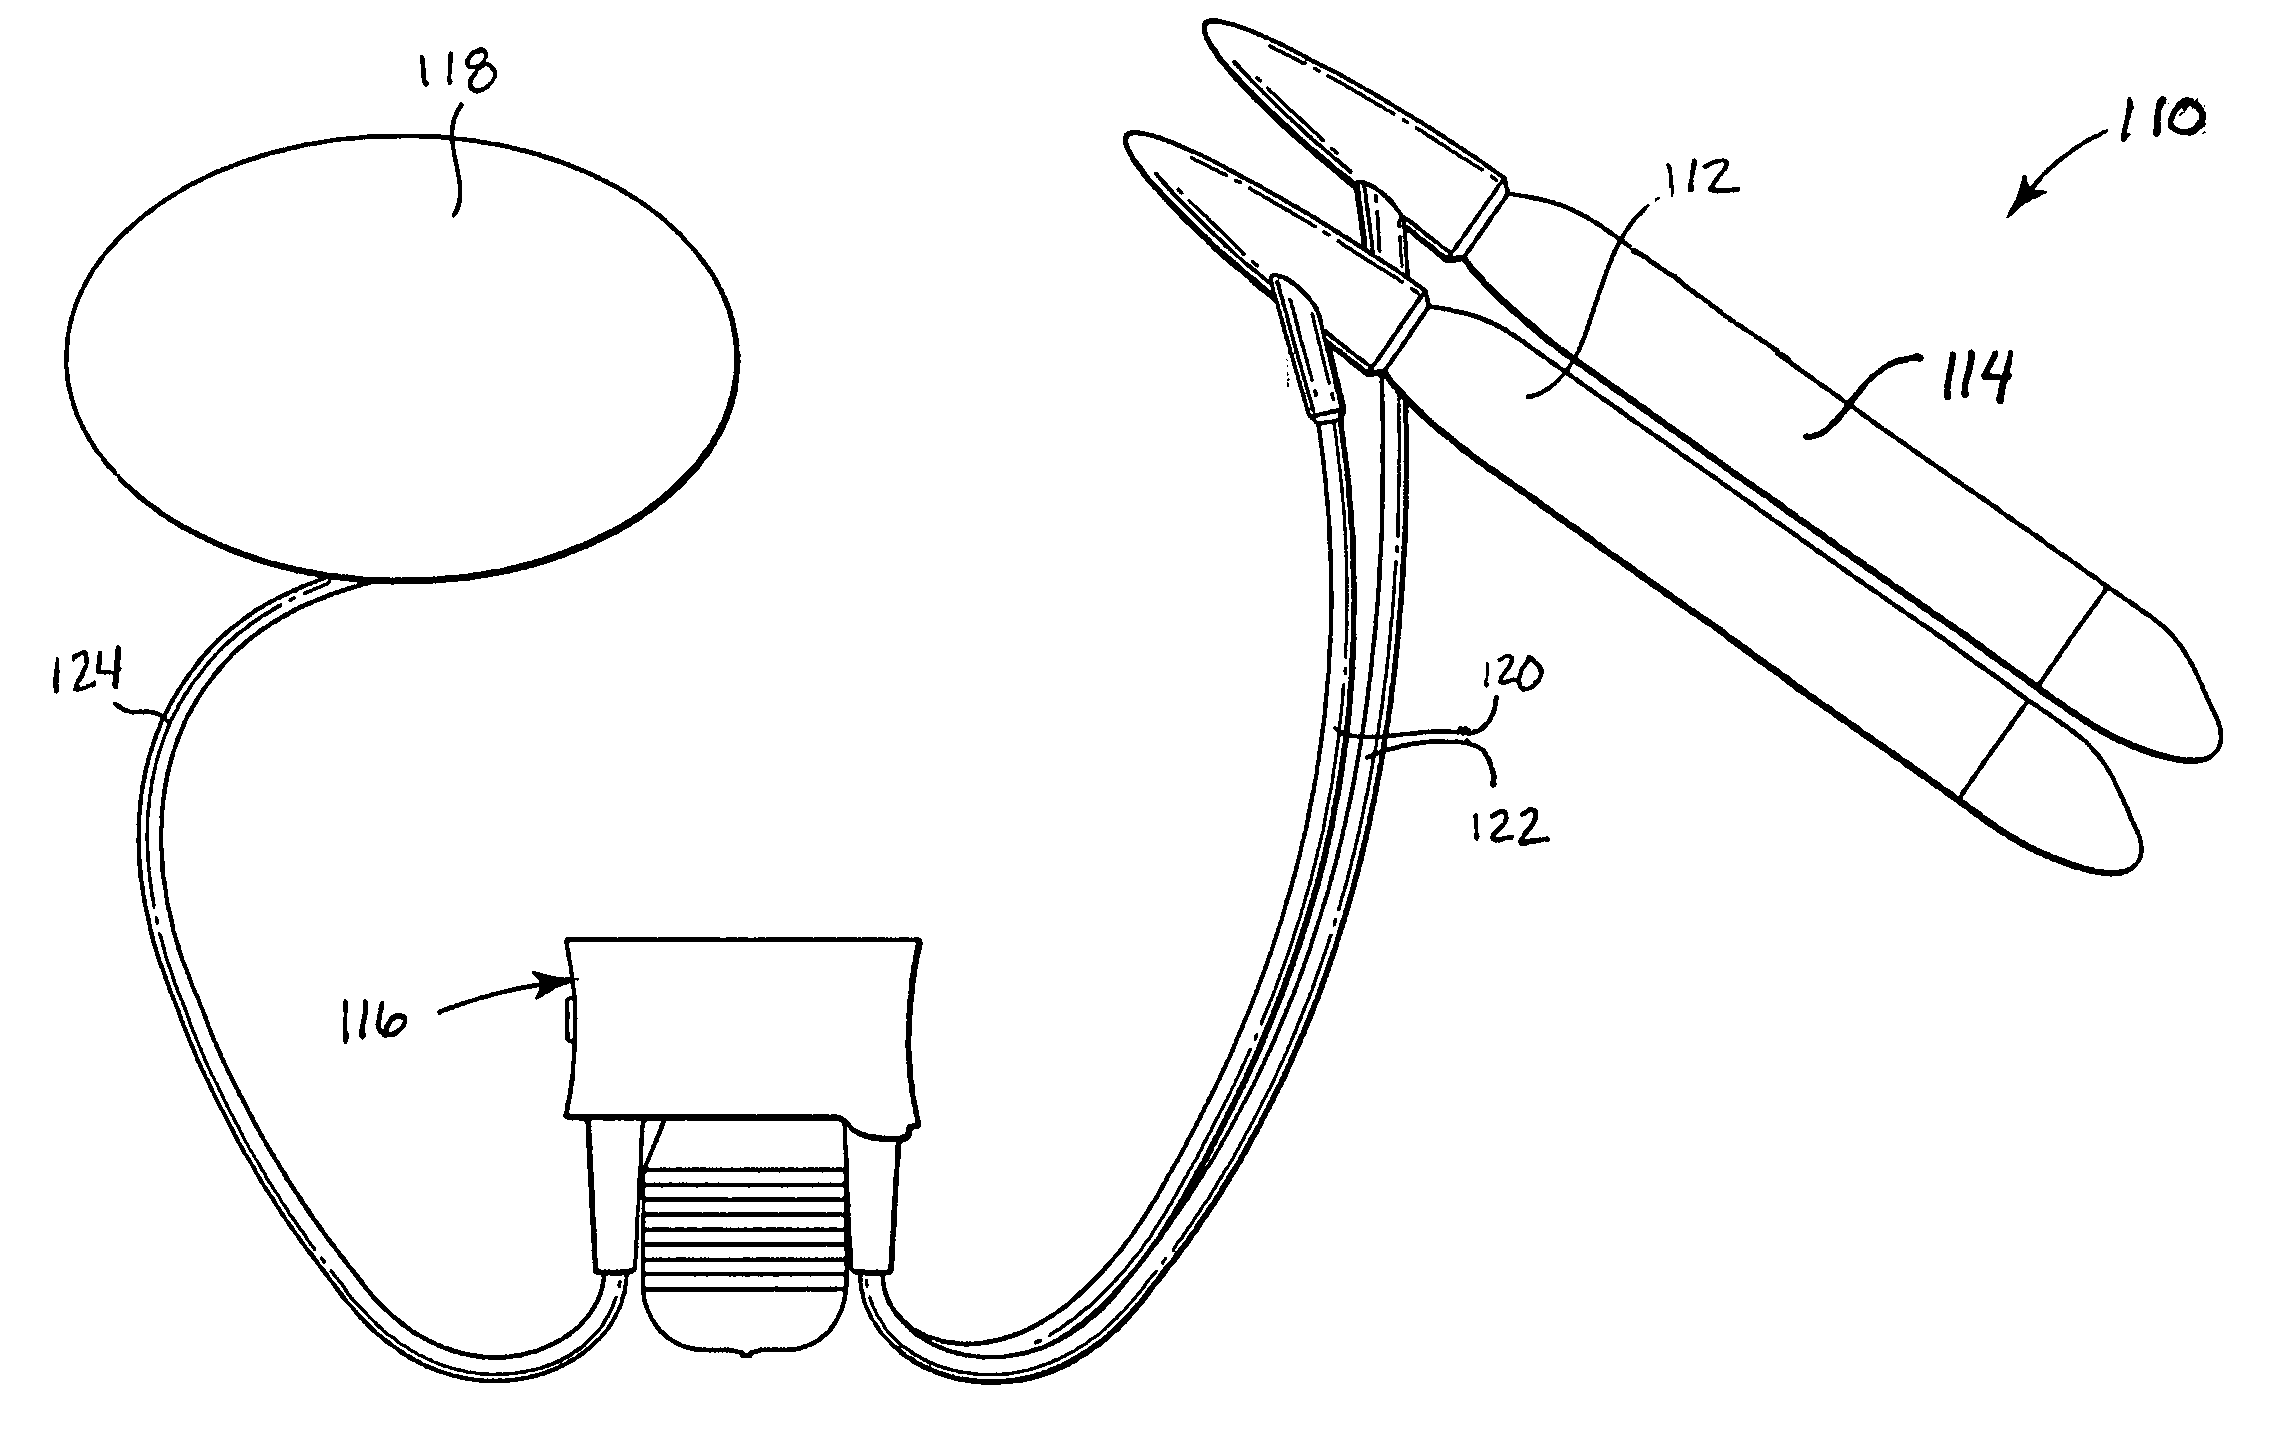 Implantable penile prosthesis pump